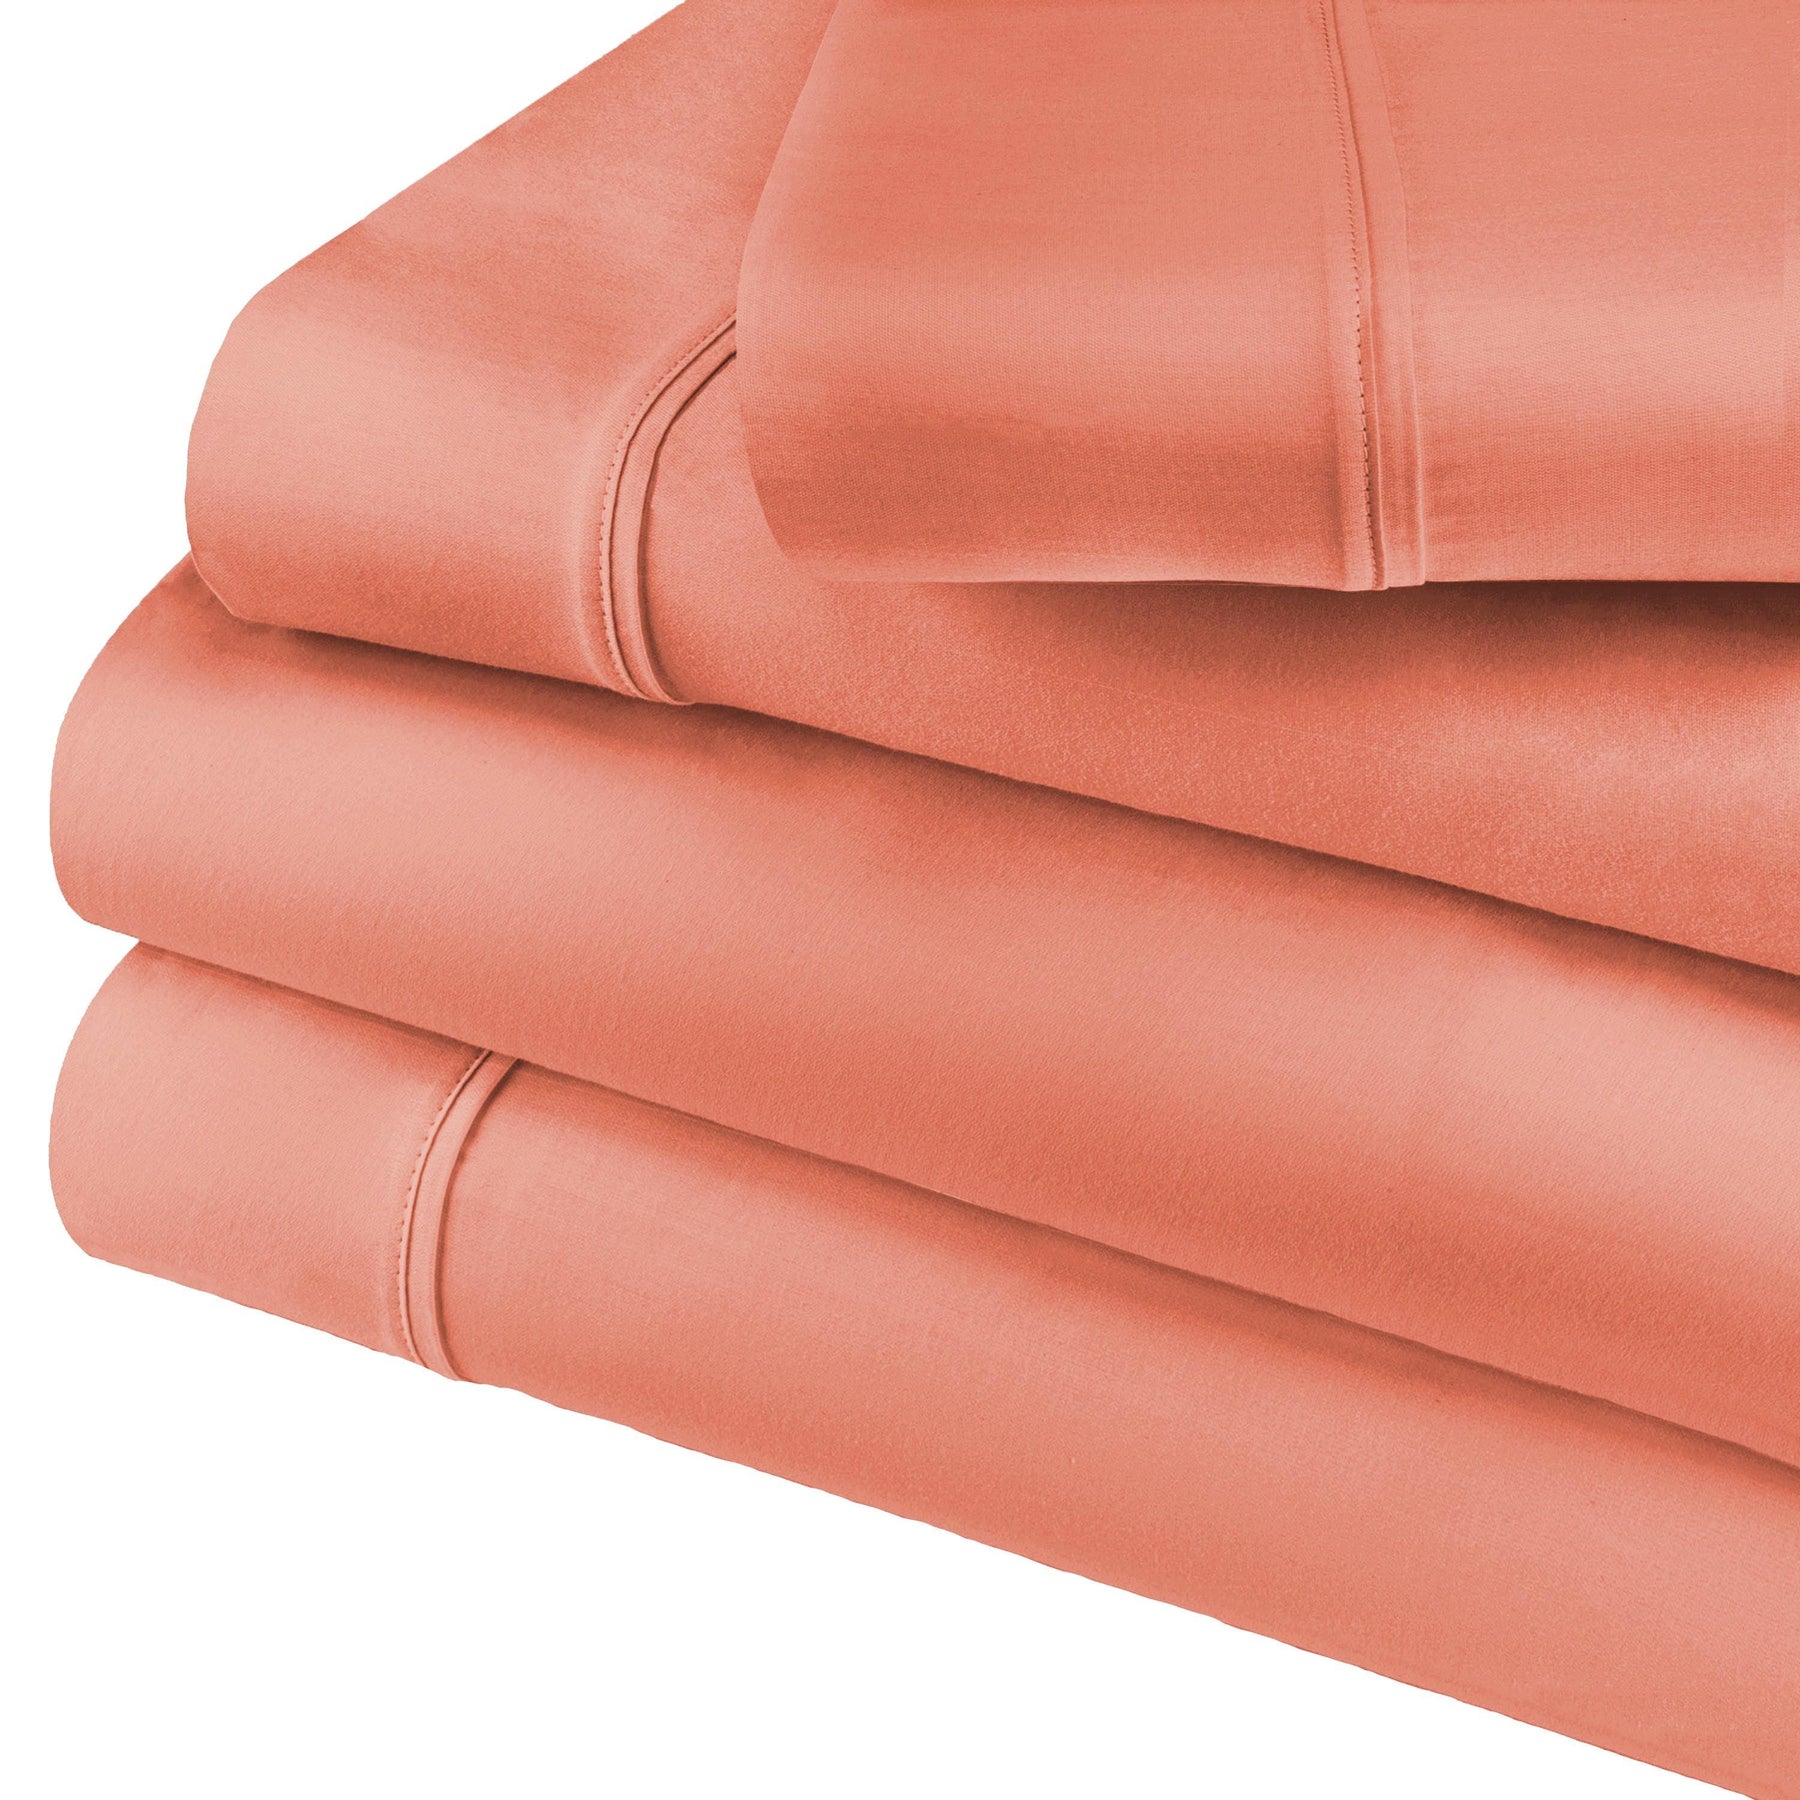  Superior Premium Plush Solid Deep Pocket Cotton Blend Bed Sheet Set -  Coral